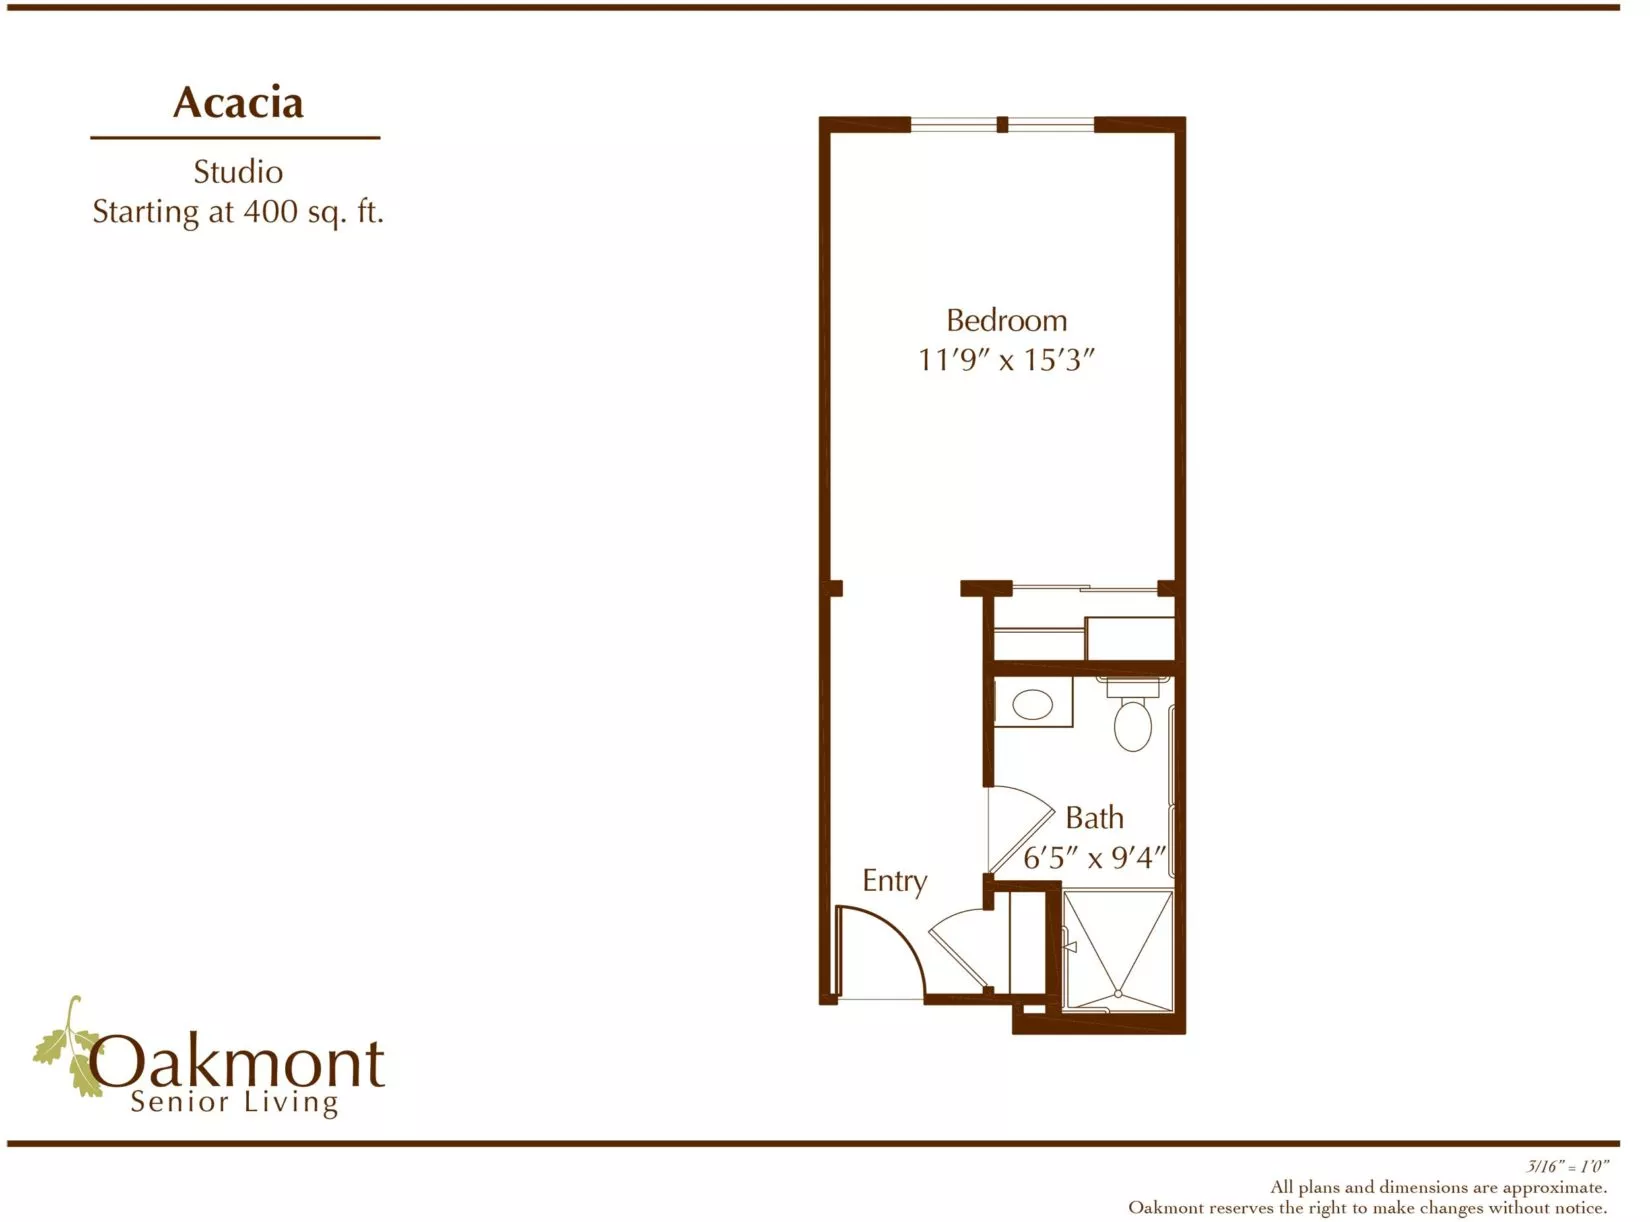 Acacia studio floor plan